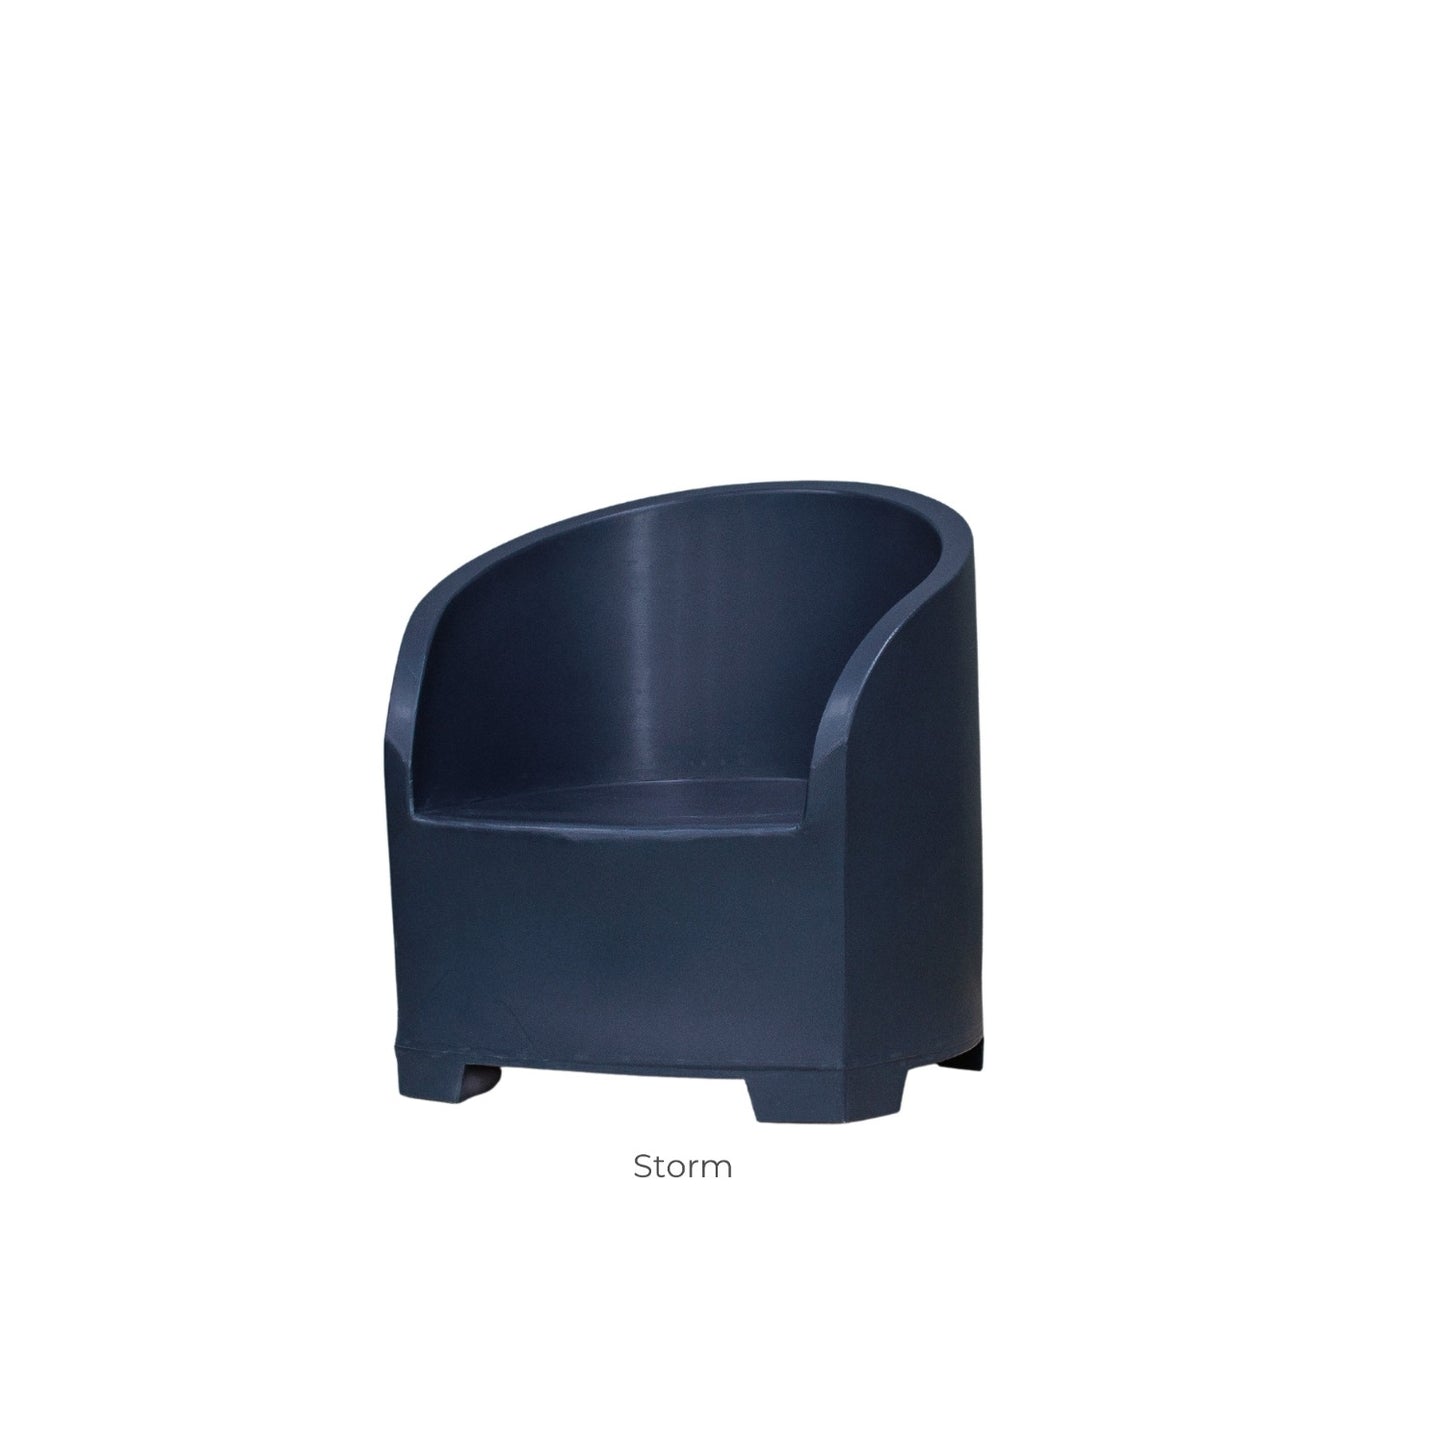 Dark blue outdoor chair. New Zealand made outdoor furniture.